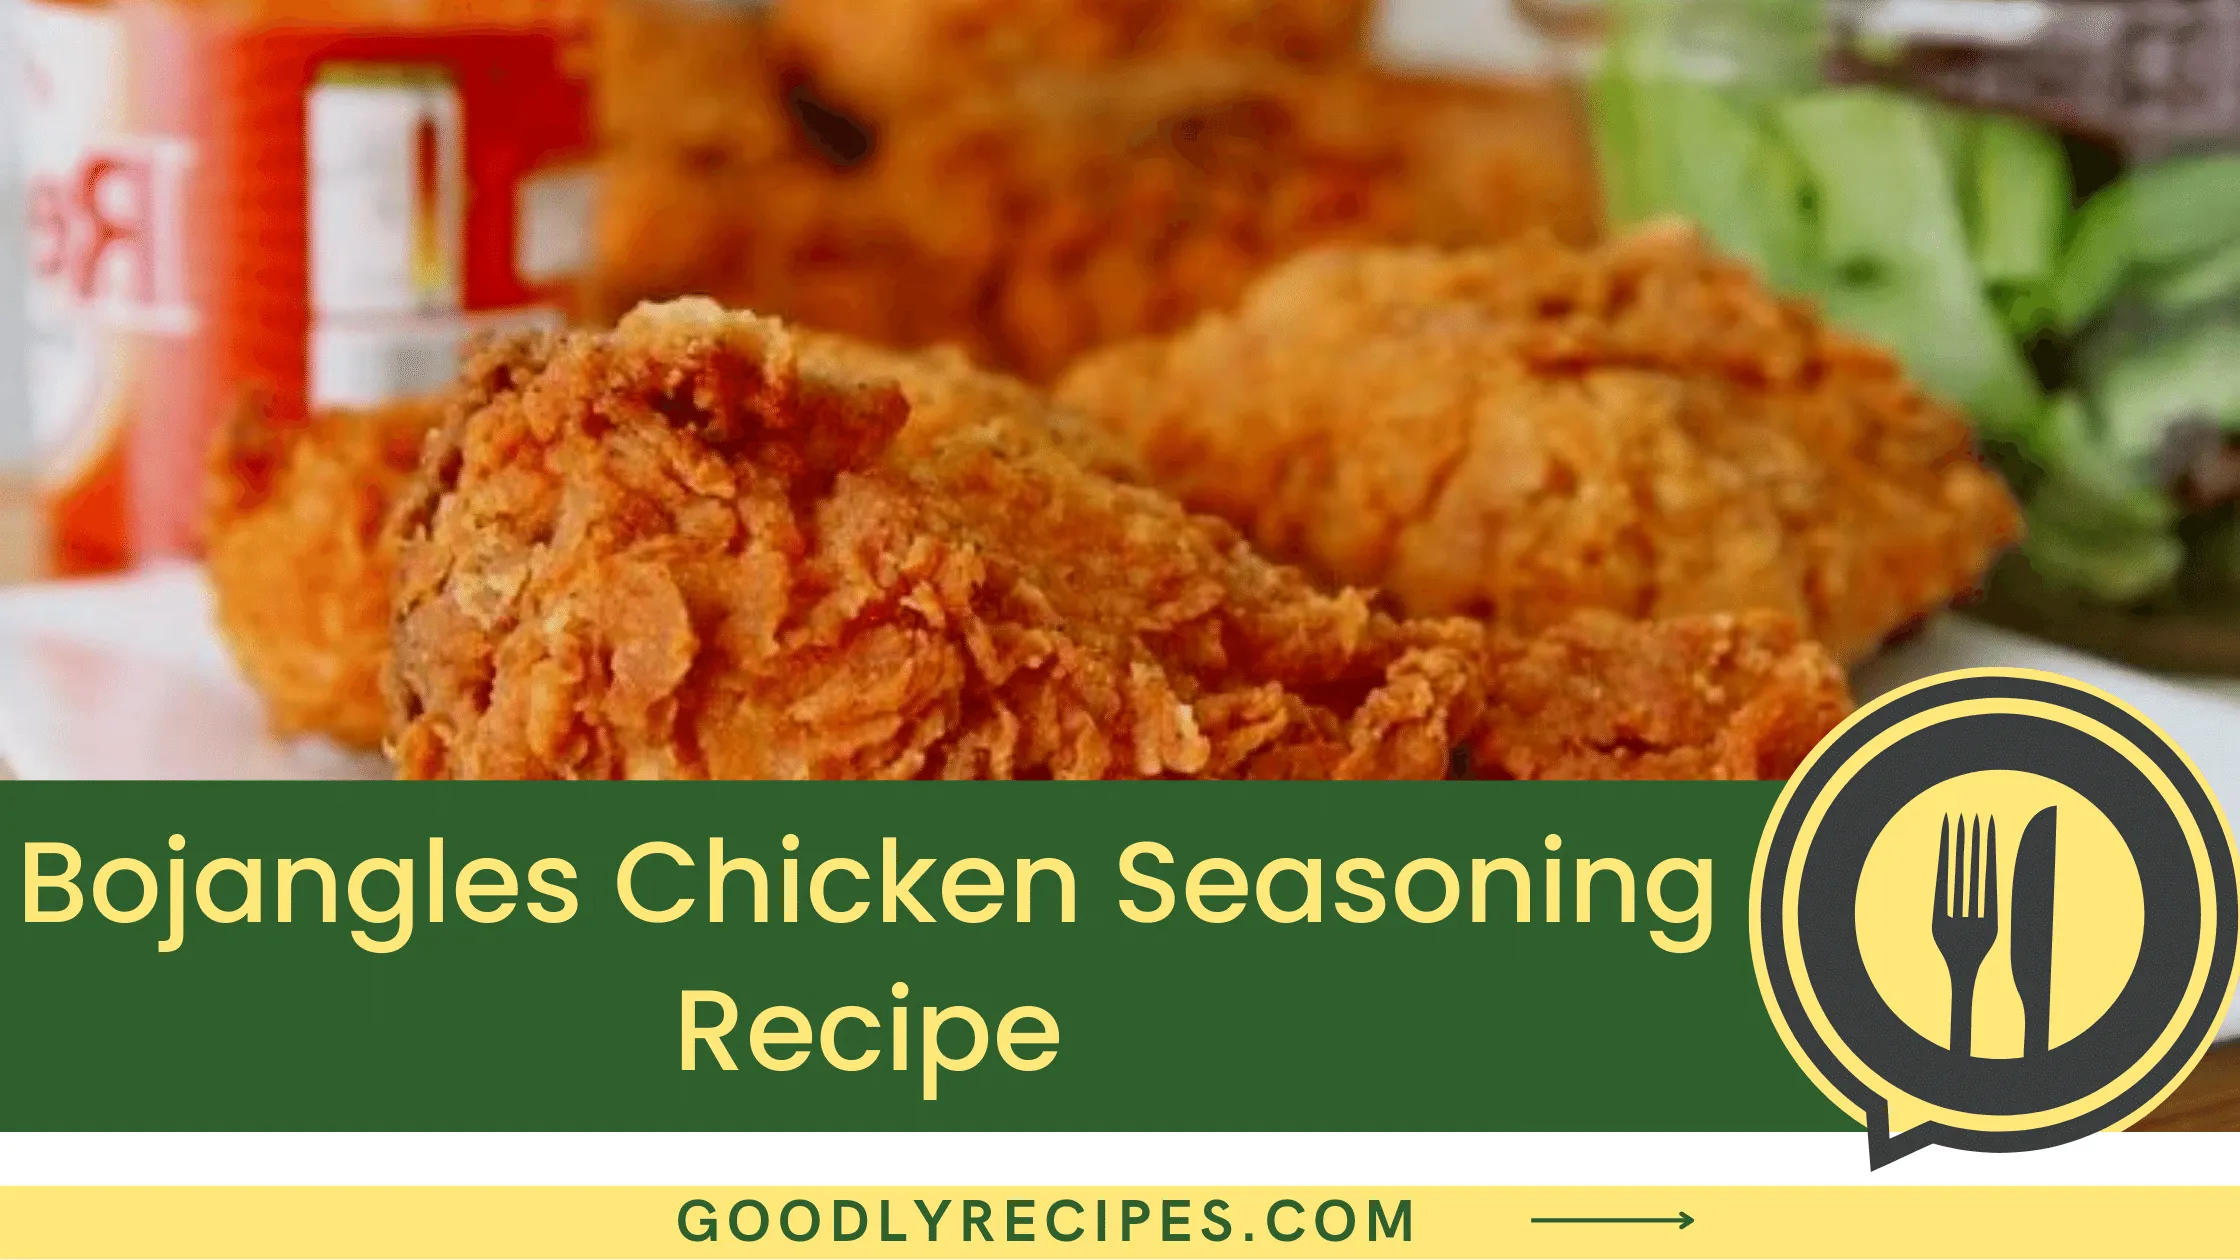 Bojangles Chicken Seasoning Recipe